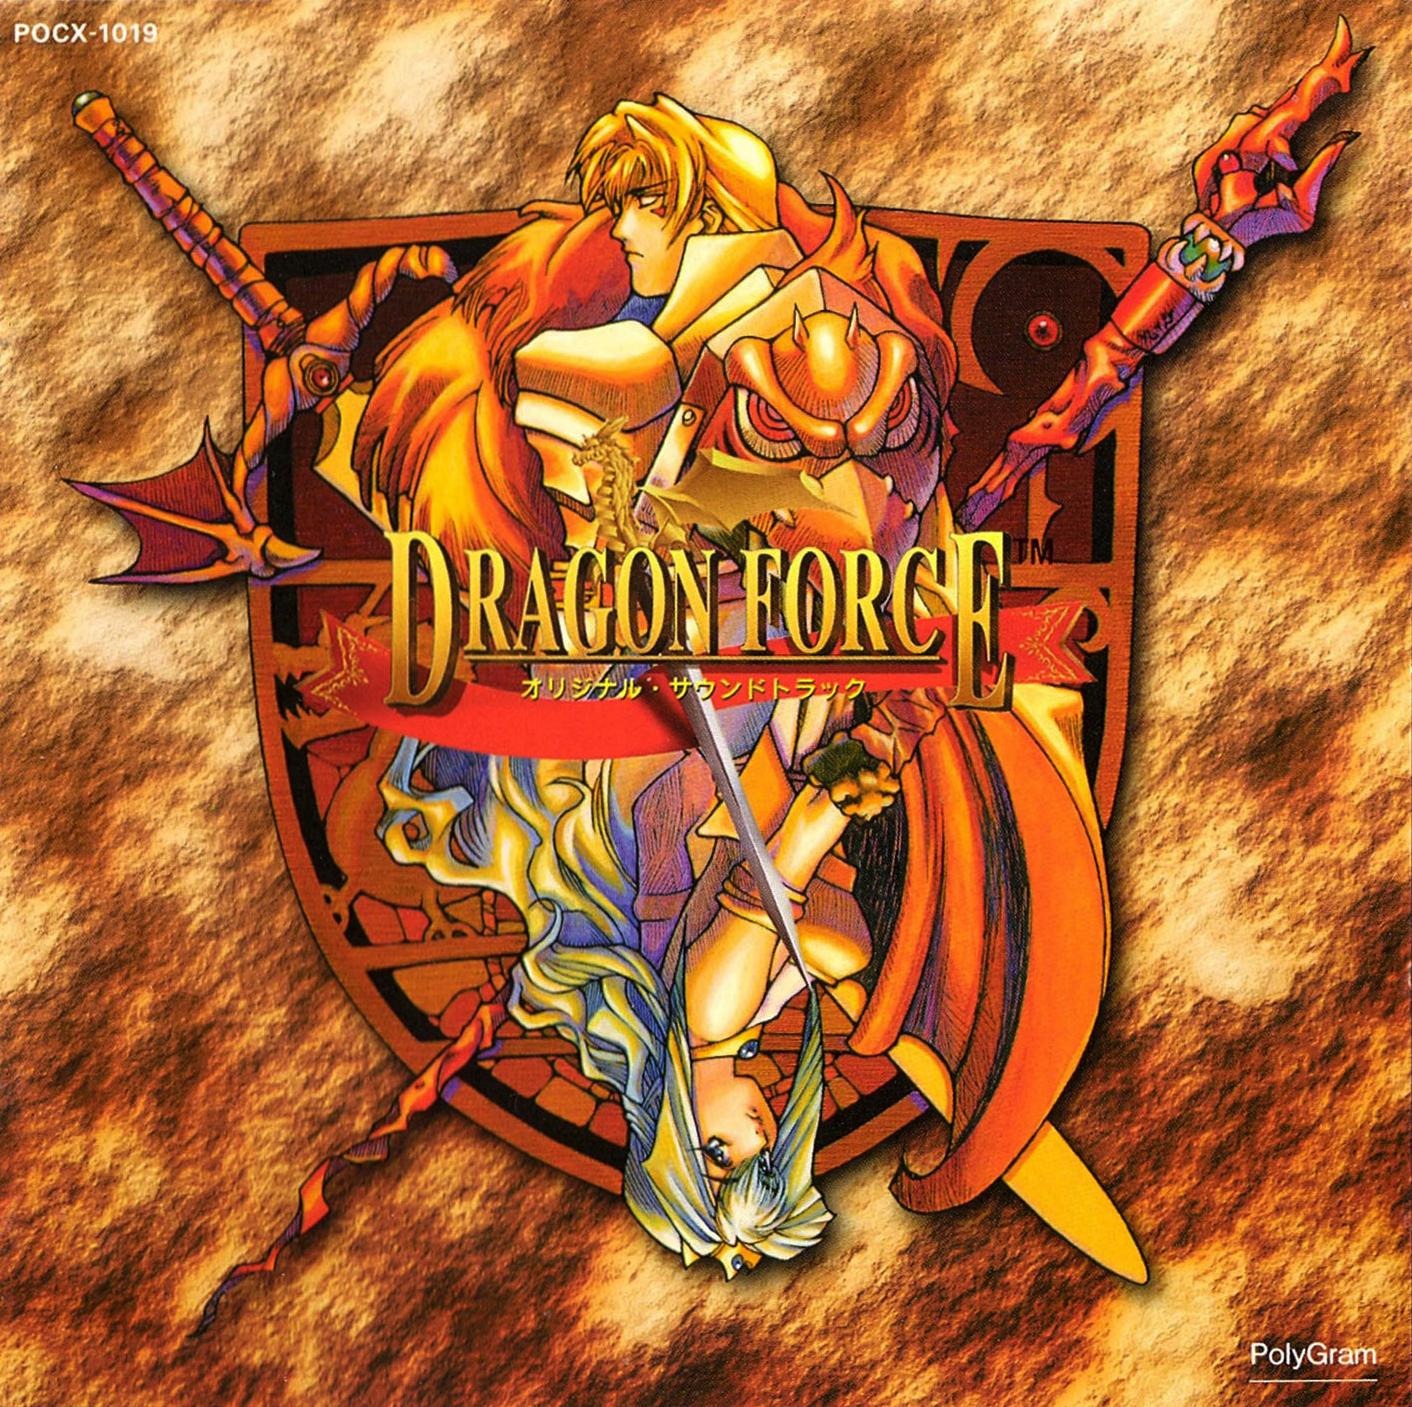 dragonforce album download